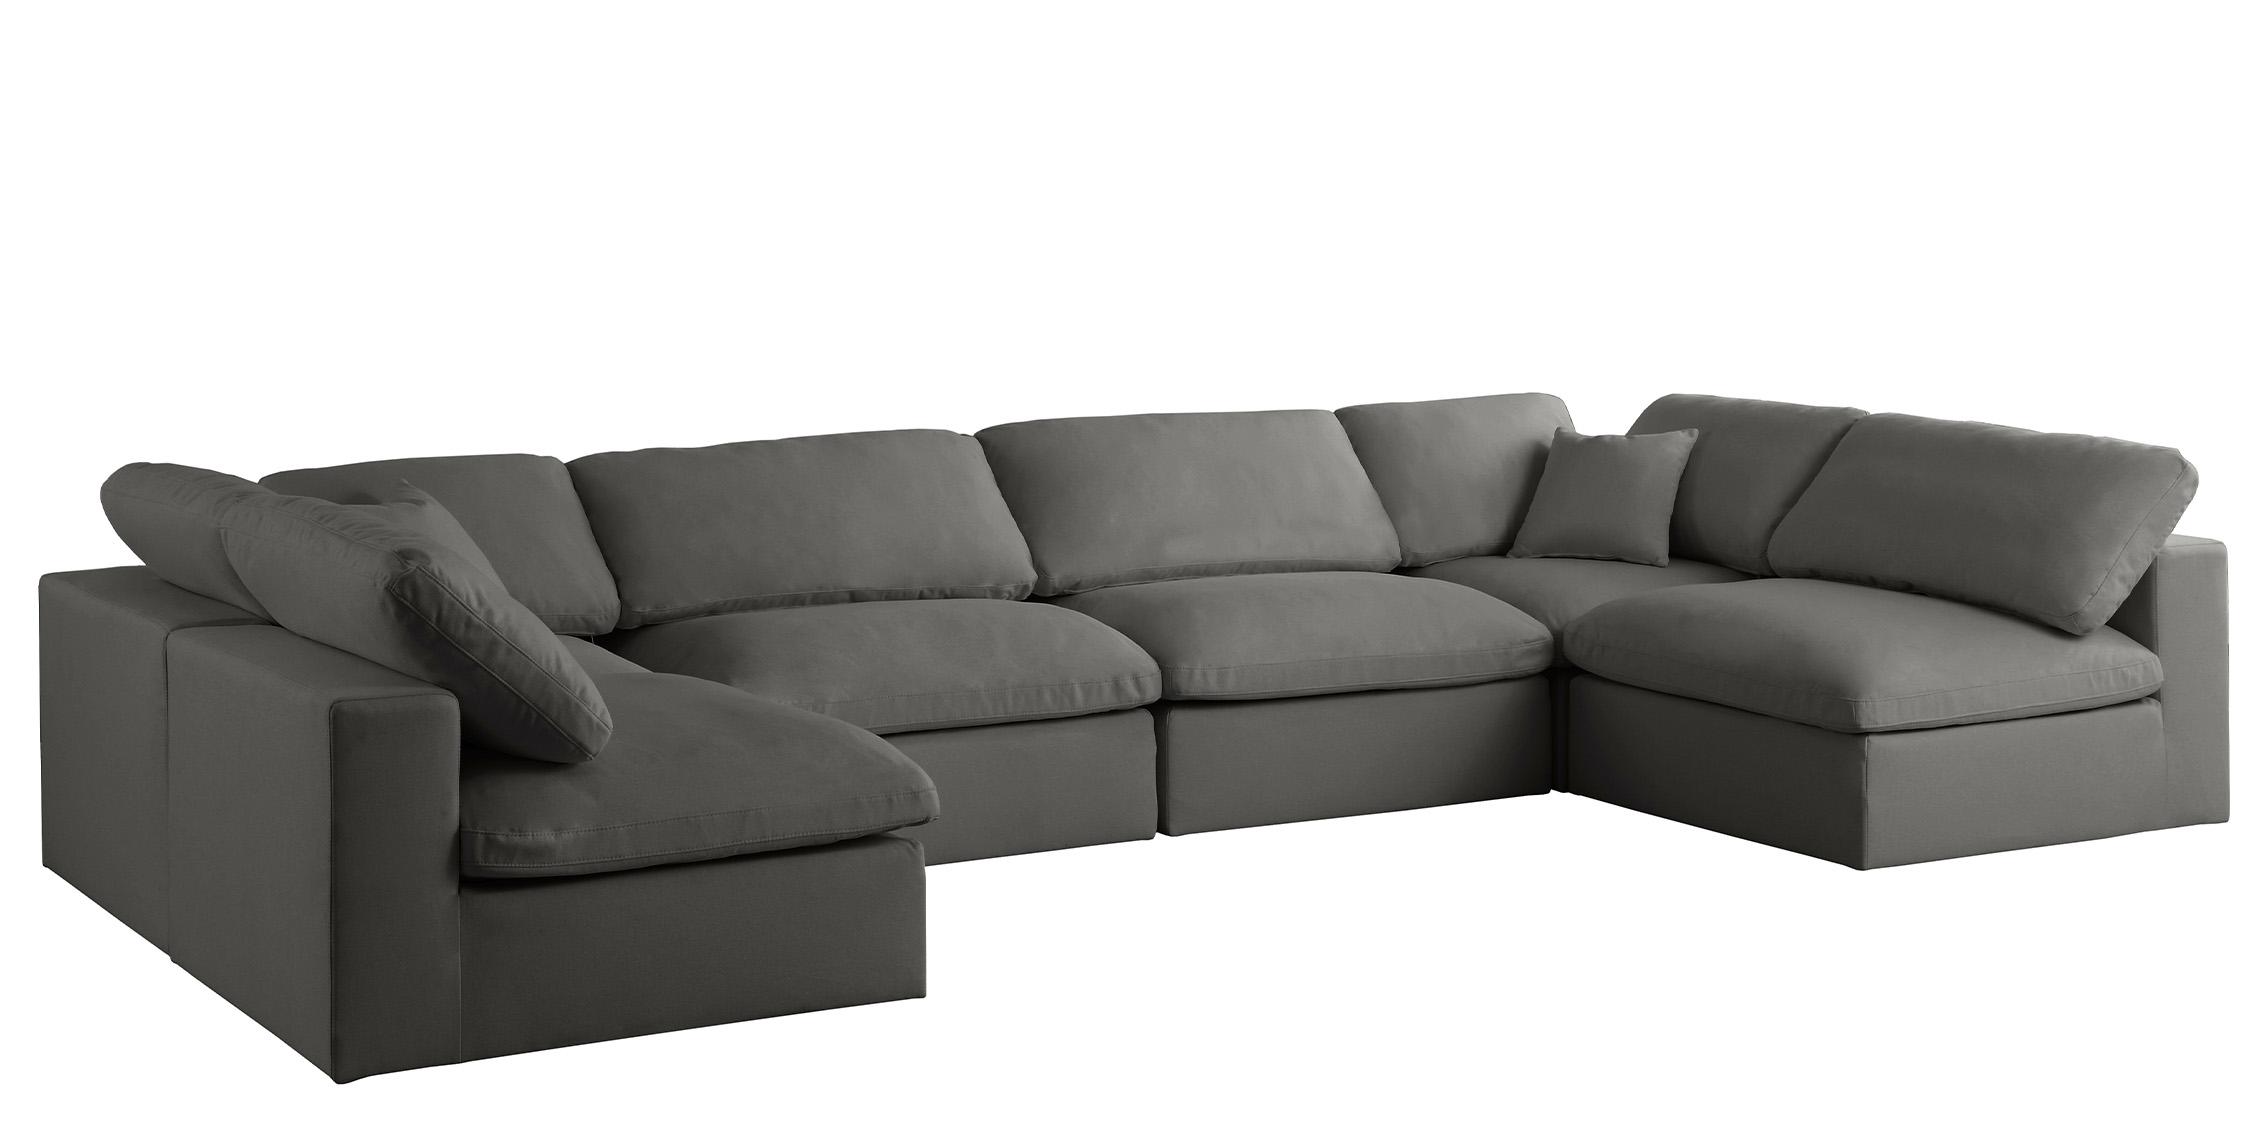 Contemporary, Modern Modular Sectional Sofa 602Grey-Sec6D 602Grey-Sec6D in Gray Fabric